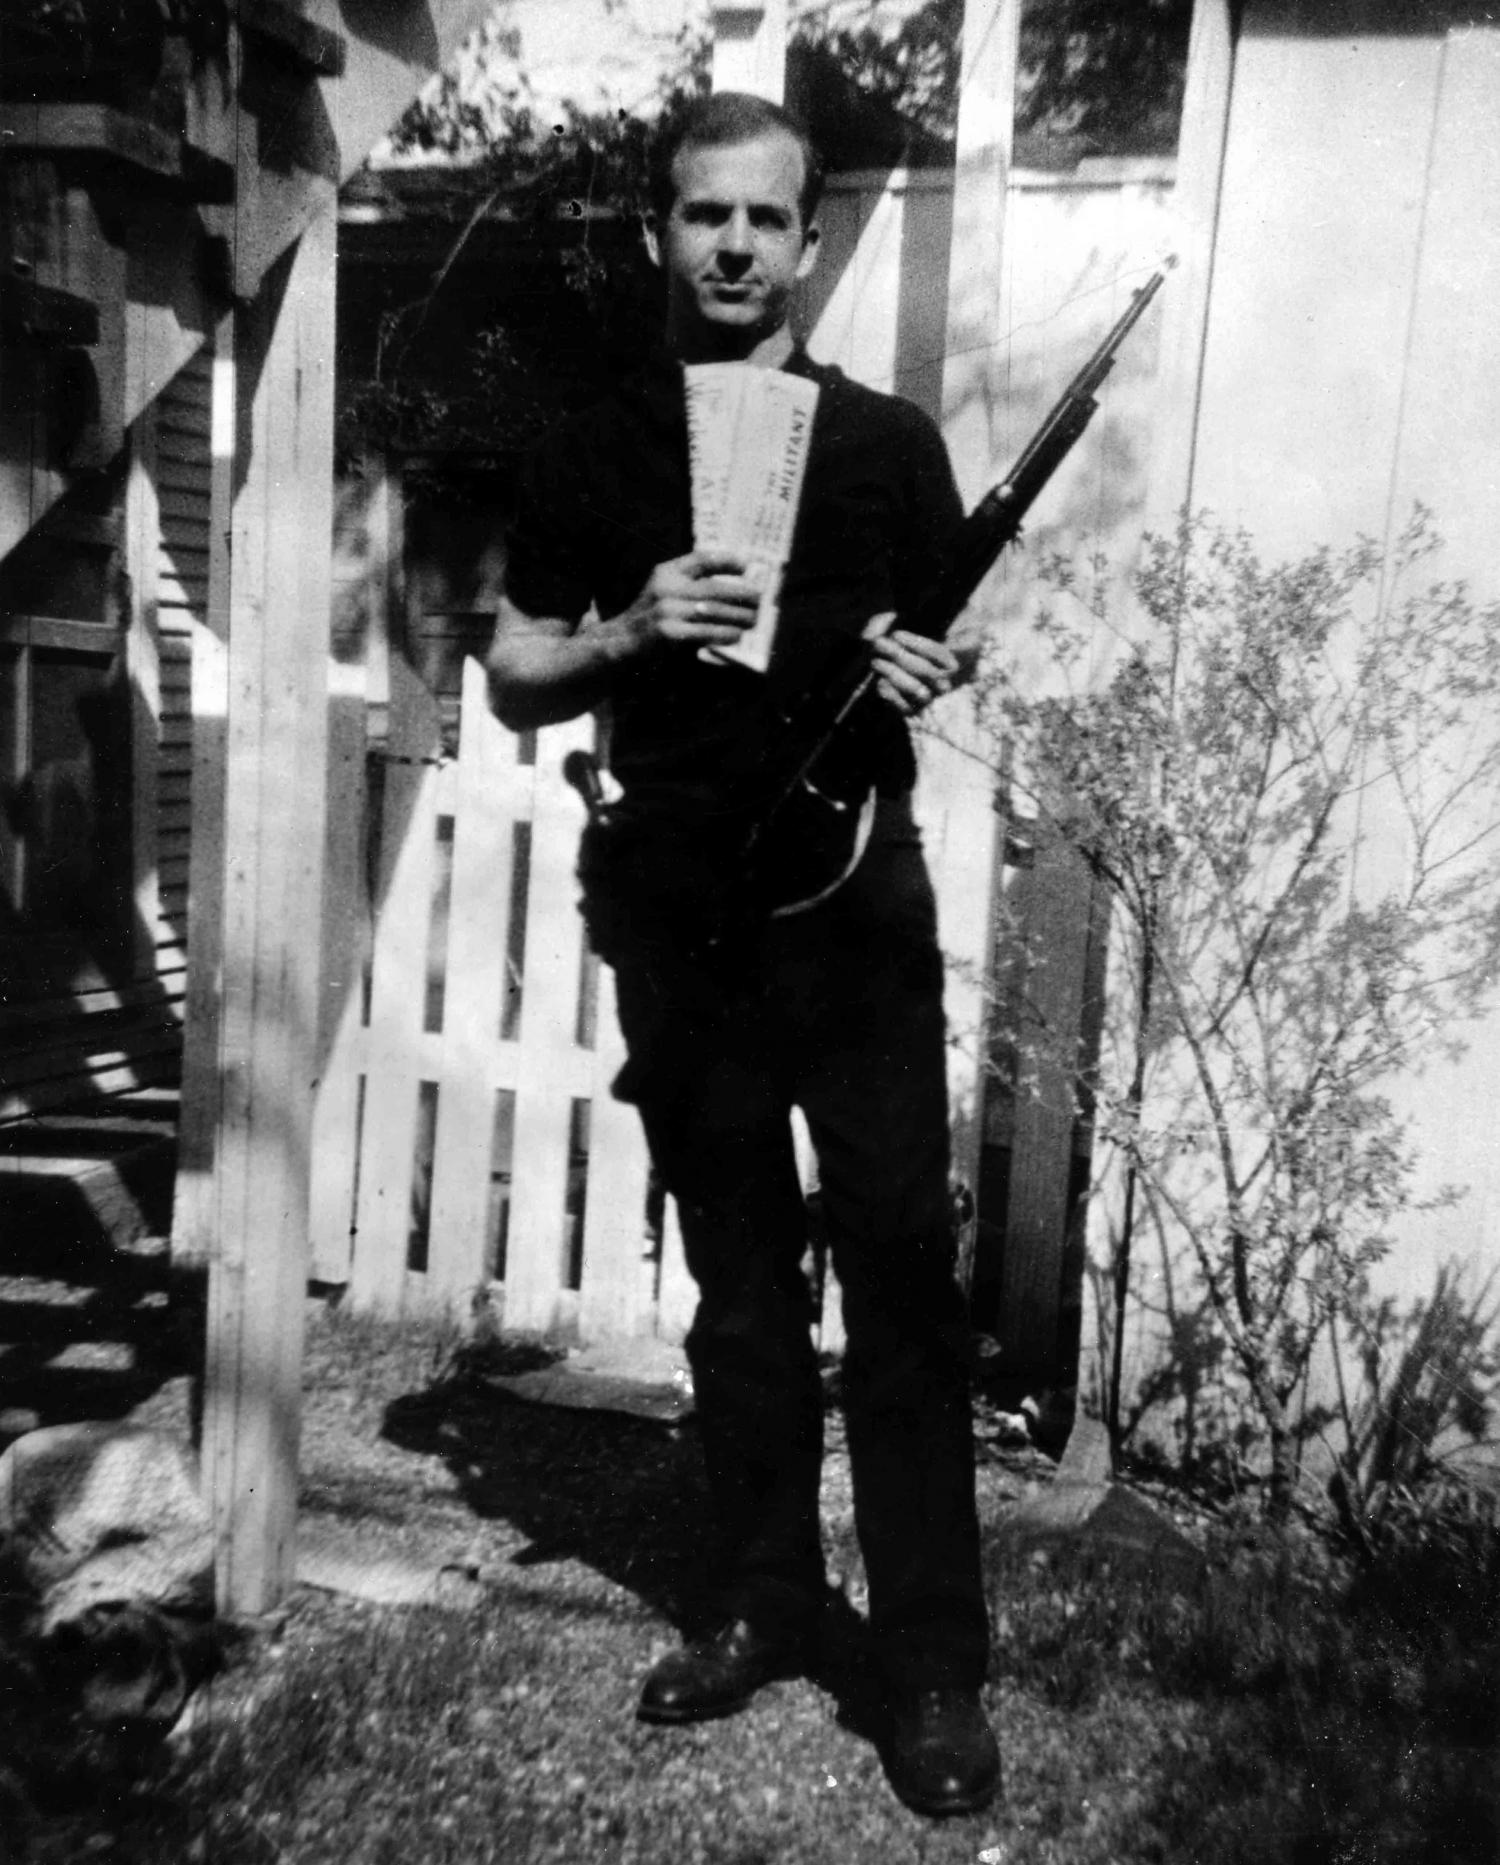 Backyard Photo Of Lee Harvey Oswald Is Authentic